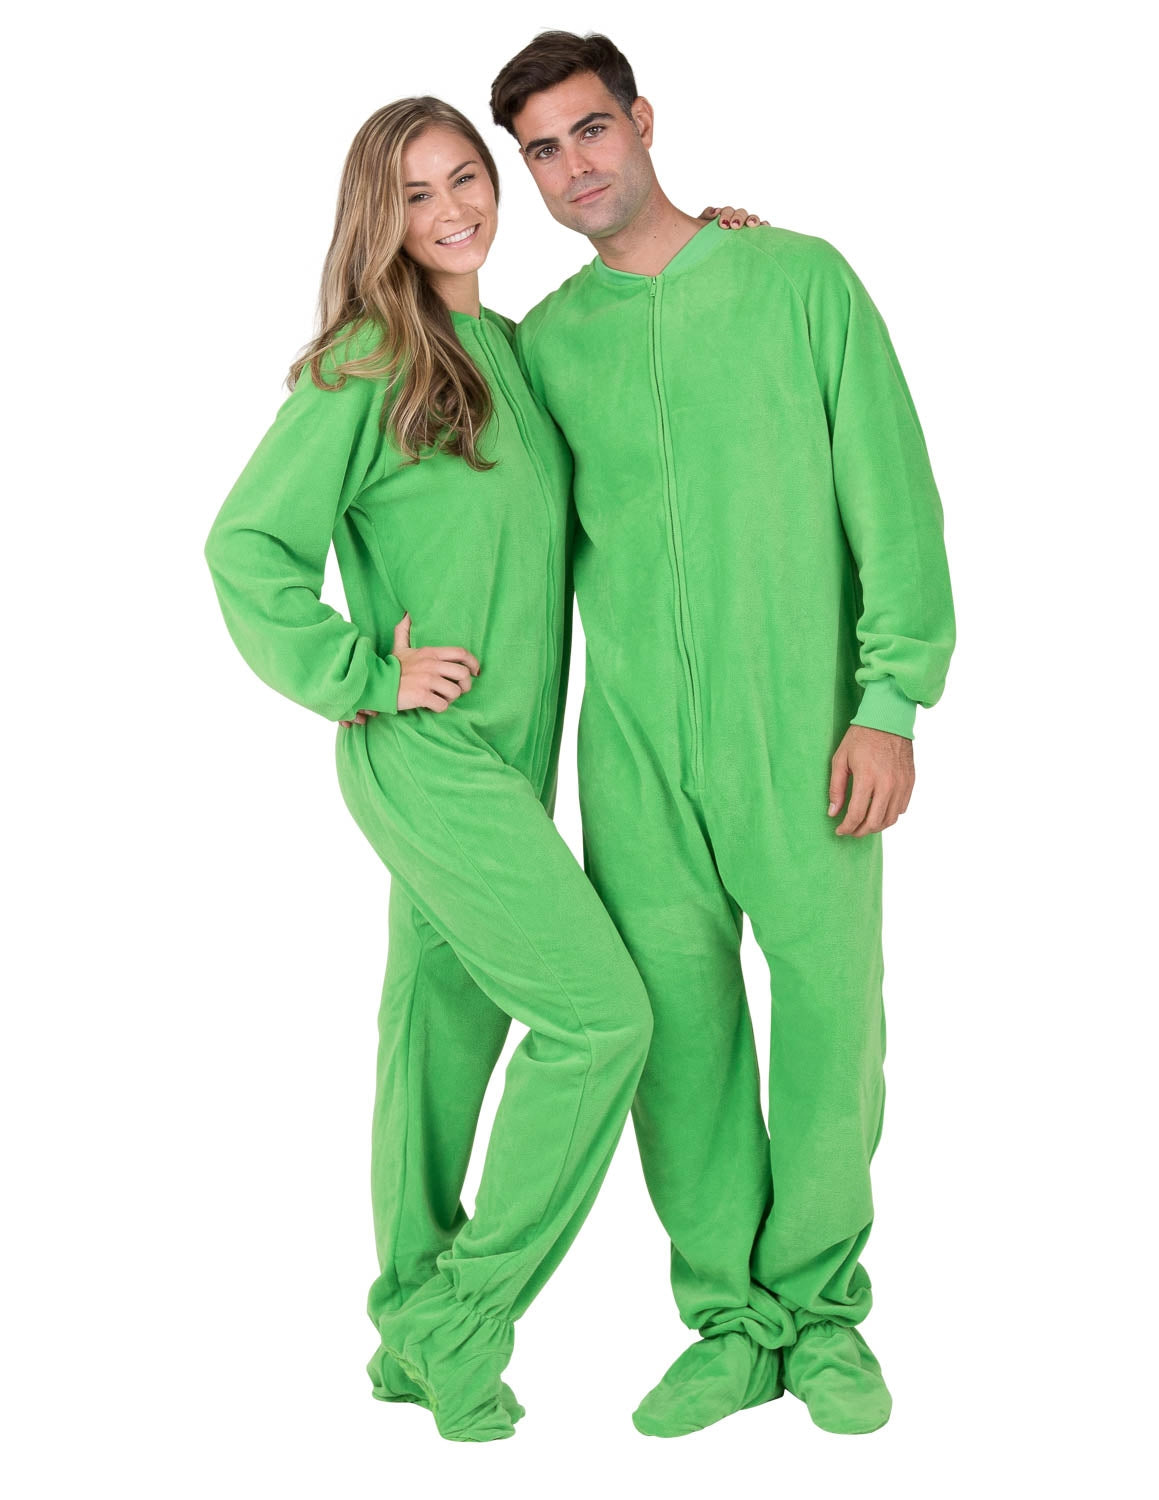 Emerald Green - Adult Footed Pajamas, Adult Pajamas